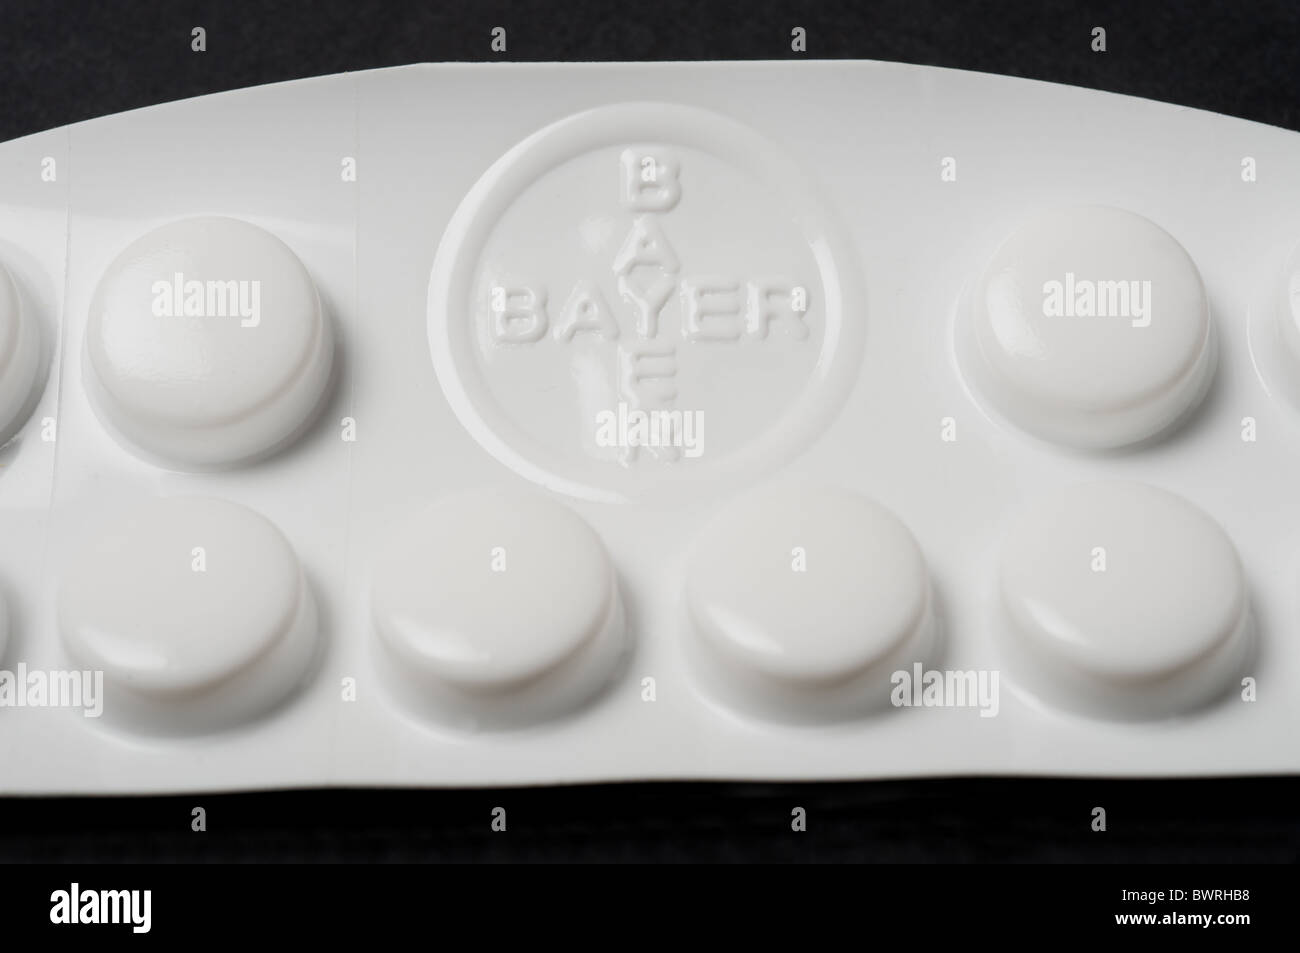 Bayer aspirin pack Stock Photo